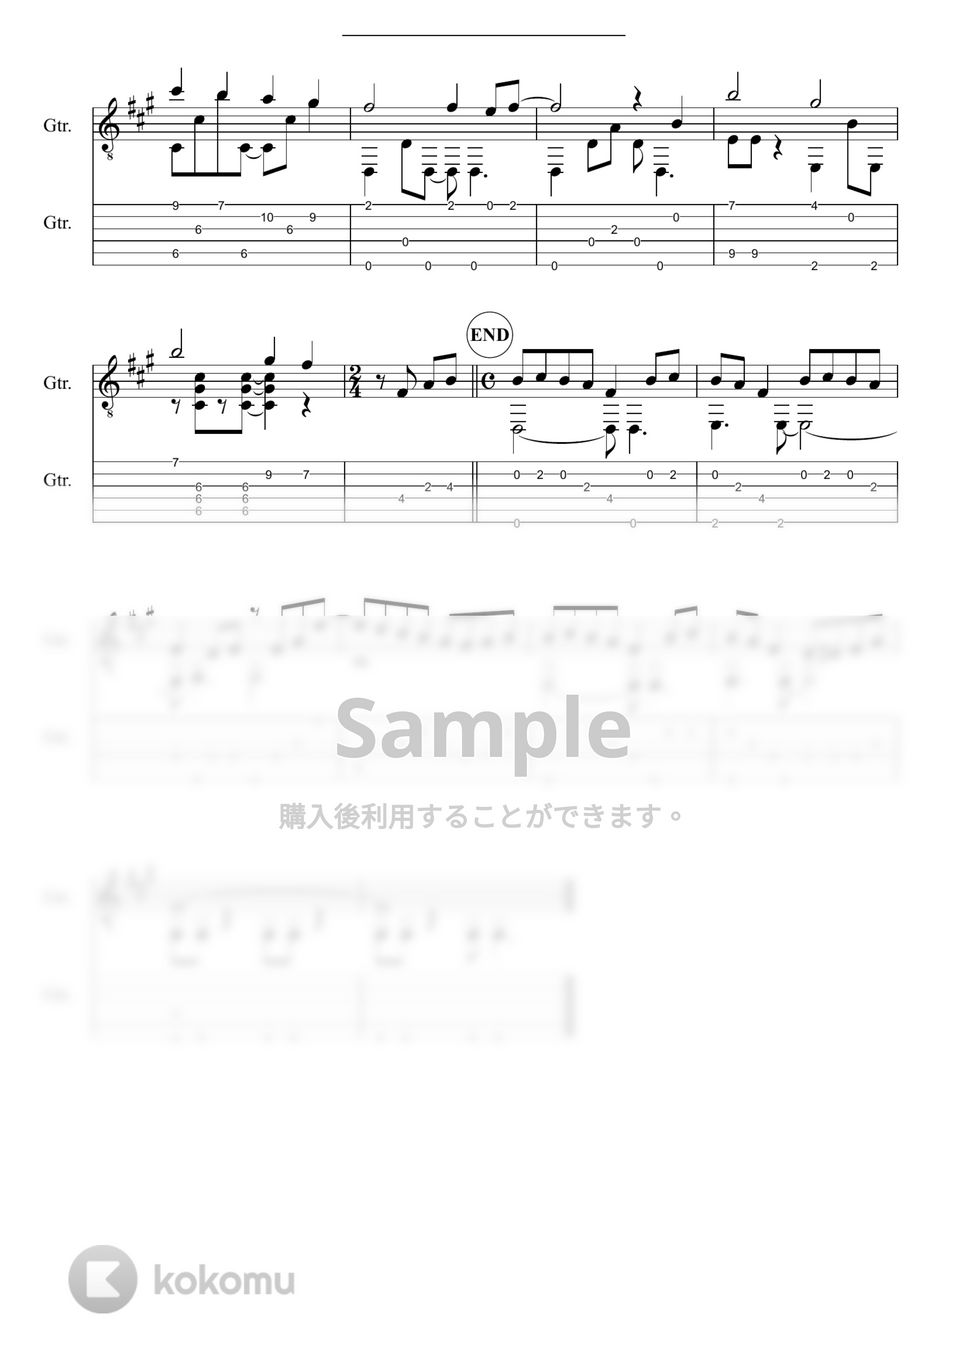 SCANDAL - 瞬間センチメンタル (『鋼の錬金術師 FULLMETAL ALCHEMIST』) by 鷹城-Takajoe